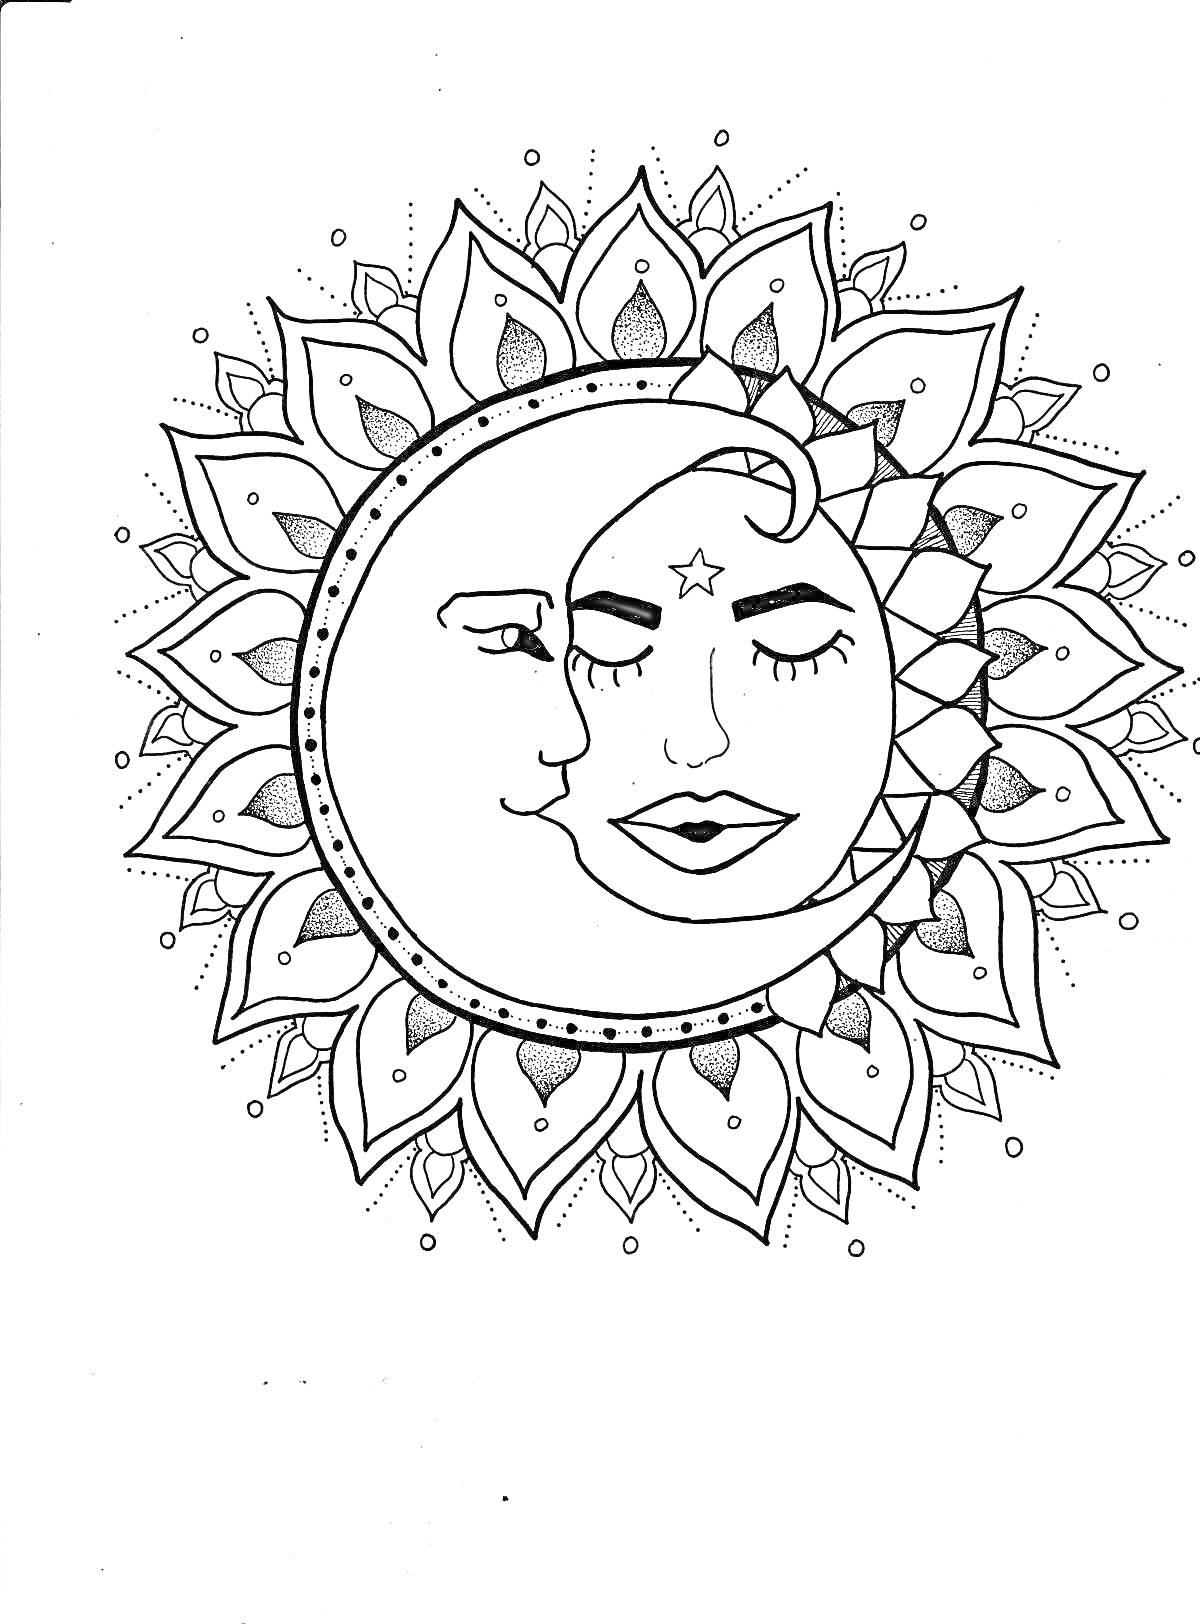 Раскраска Луна и солнце с человеческими лицами внутри цветочного круга